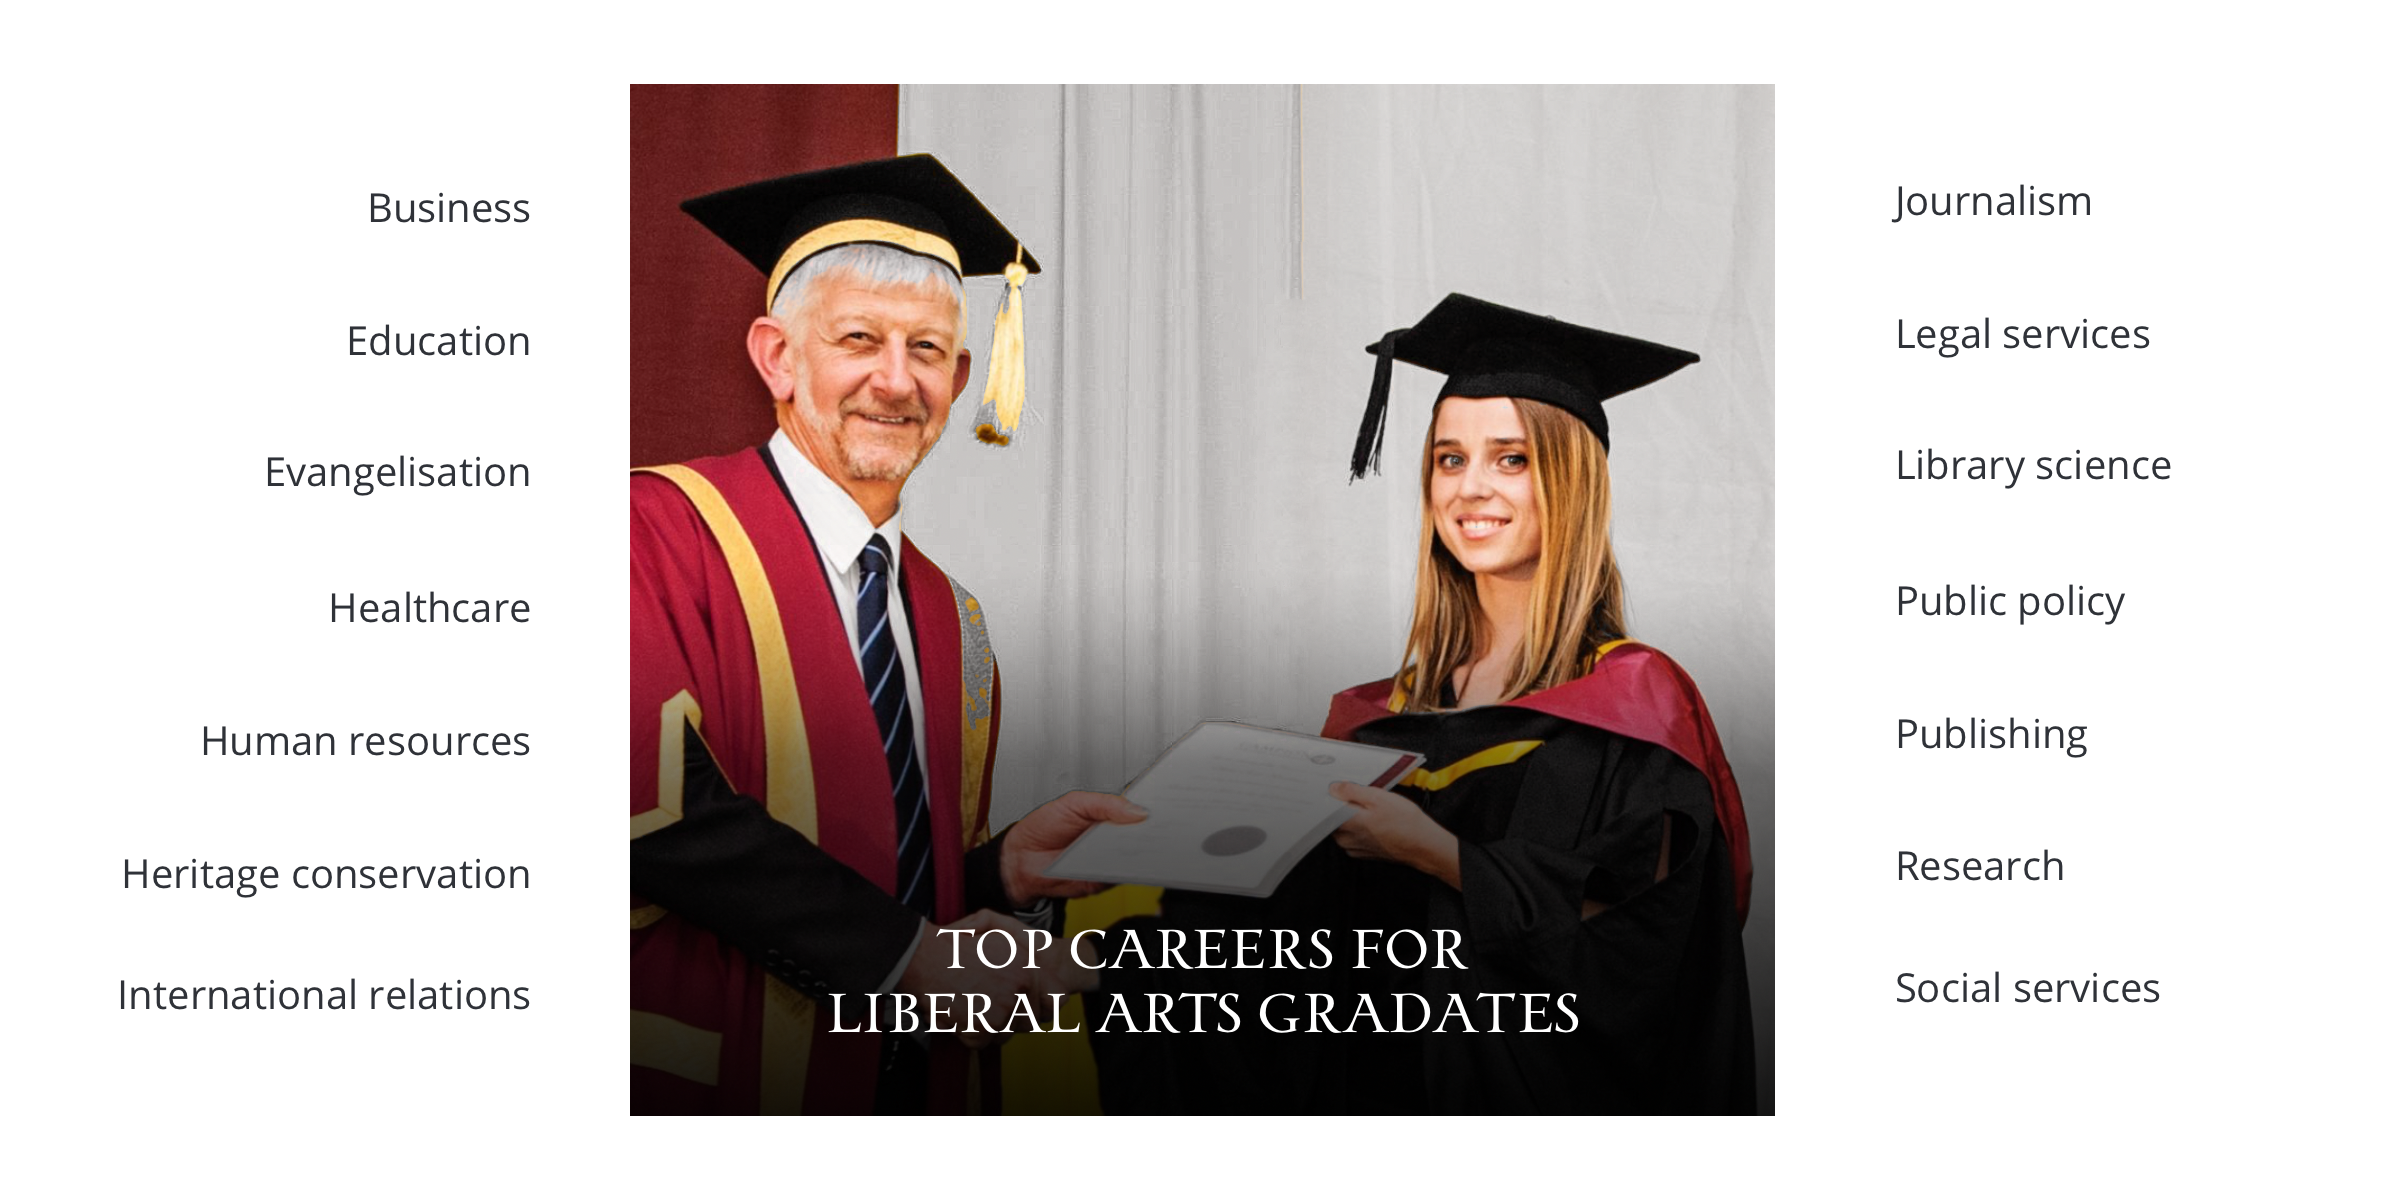 Top careers for liberal arts graduates